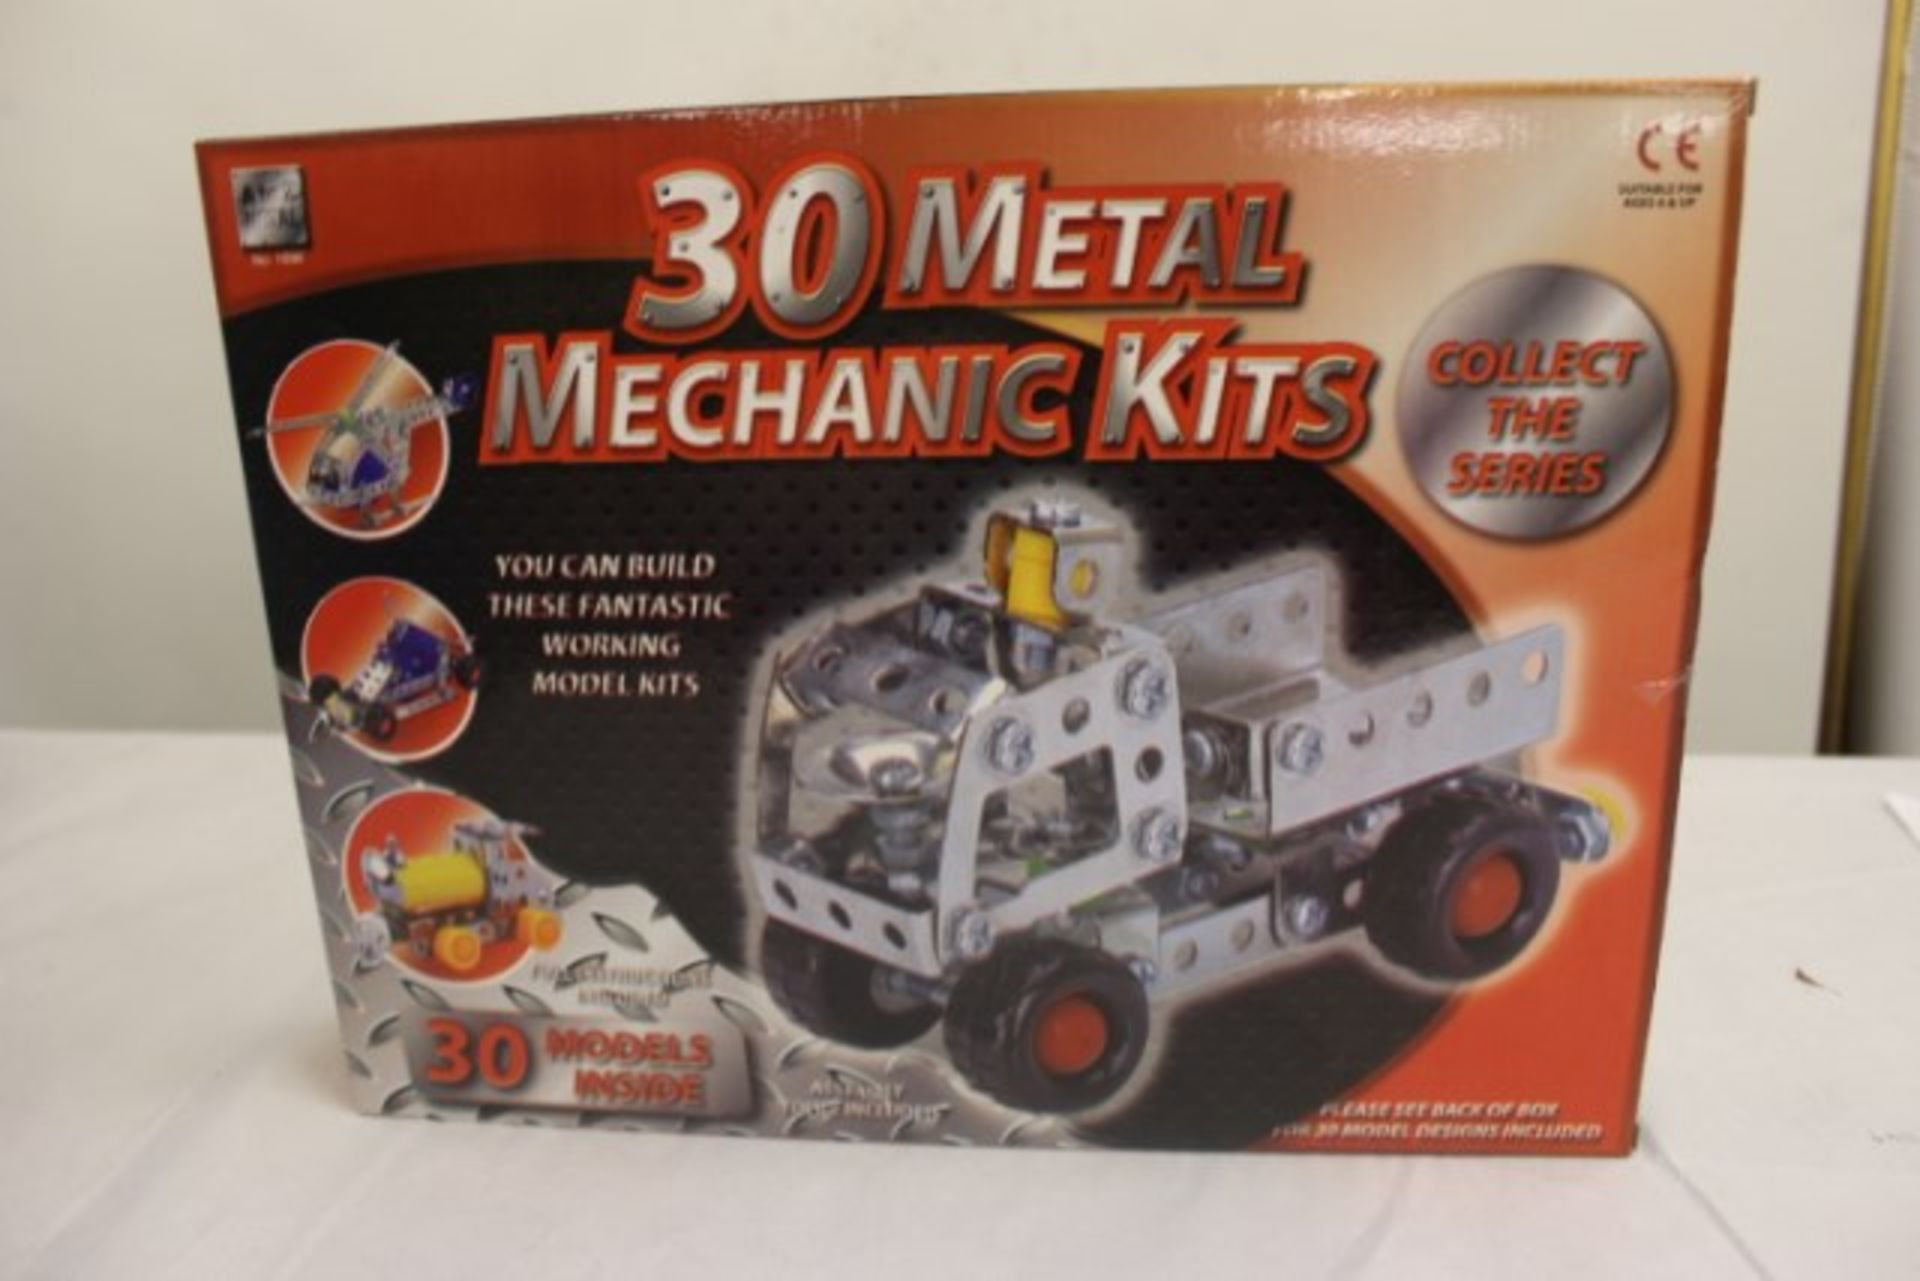 V Large Meccano Type Construction Kit - Makes 30 Models